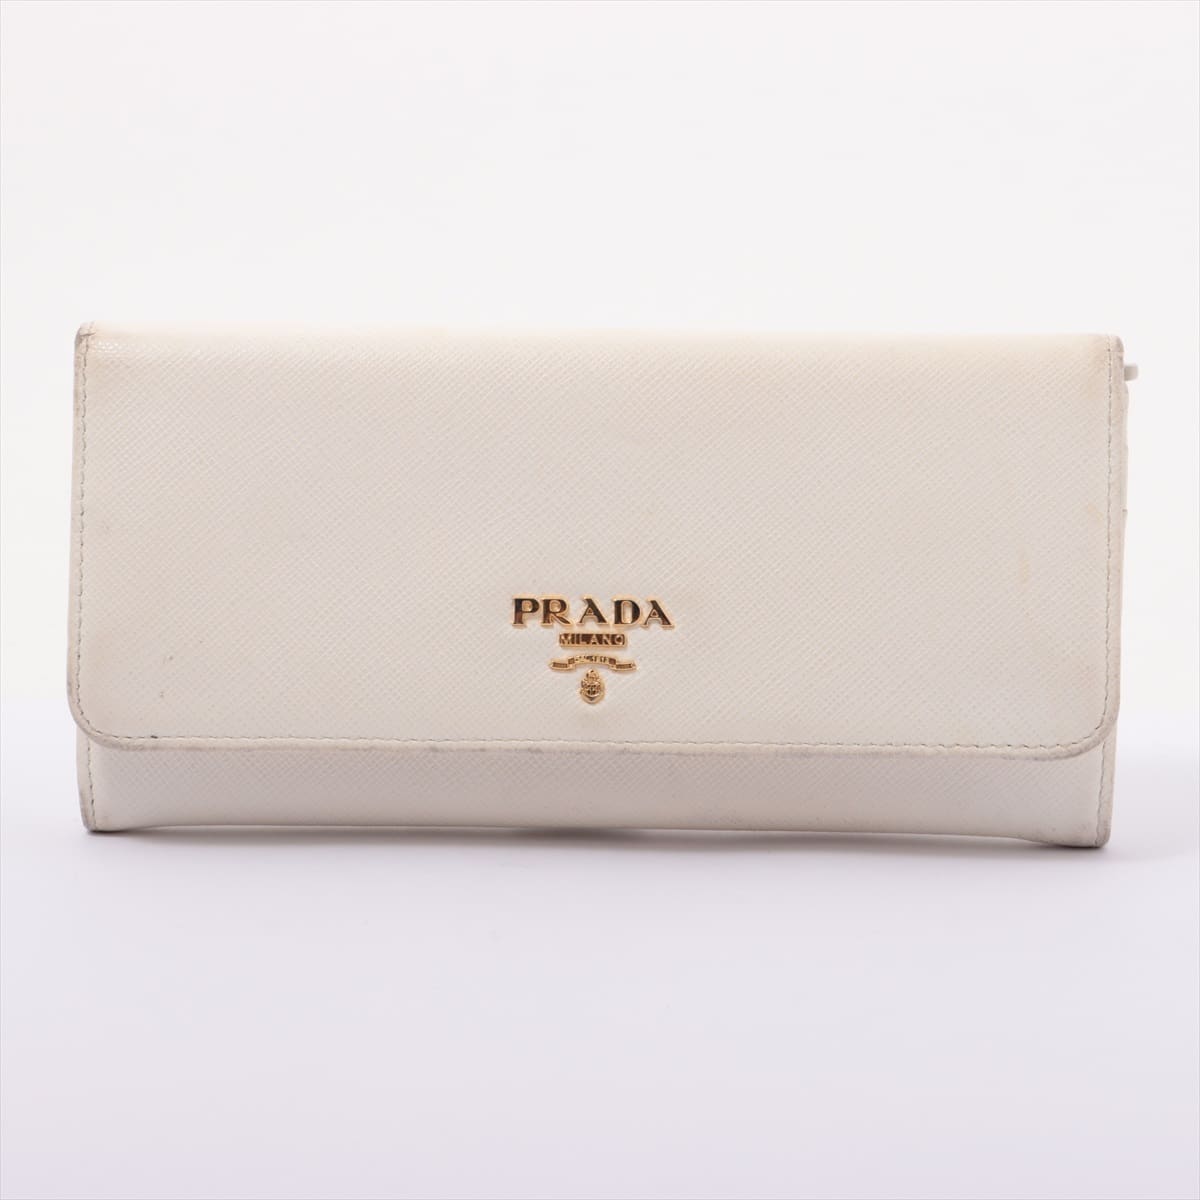 Prada Saffiano 1MH132 Leather Wallet White